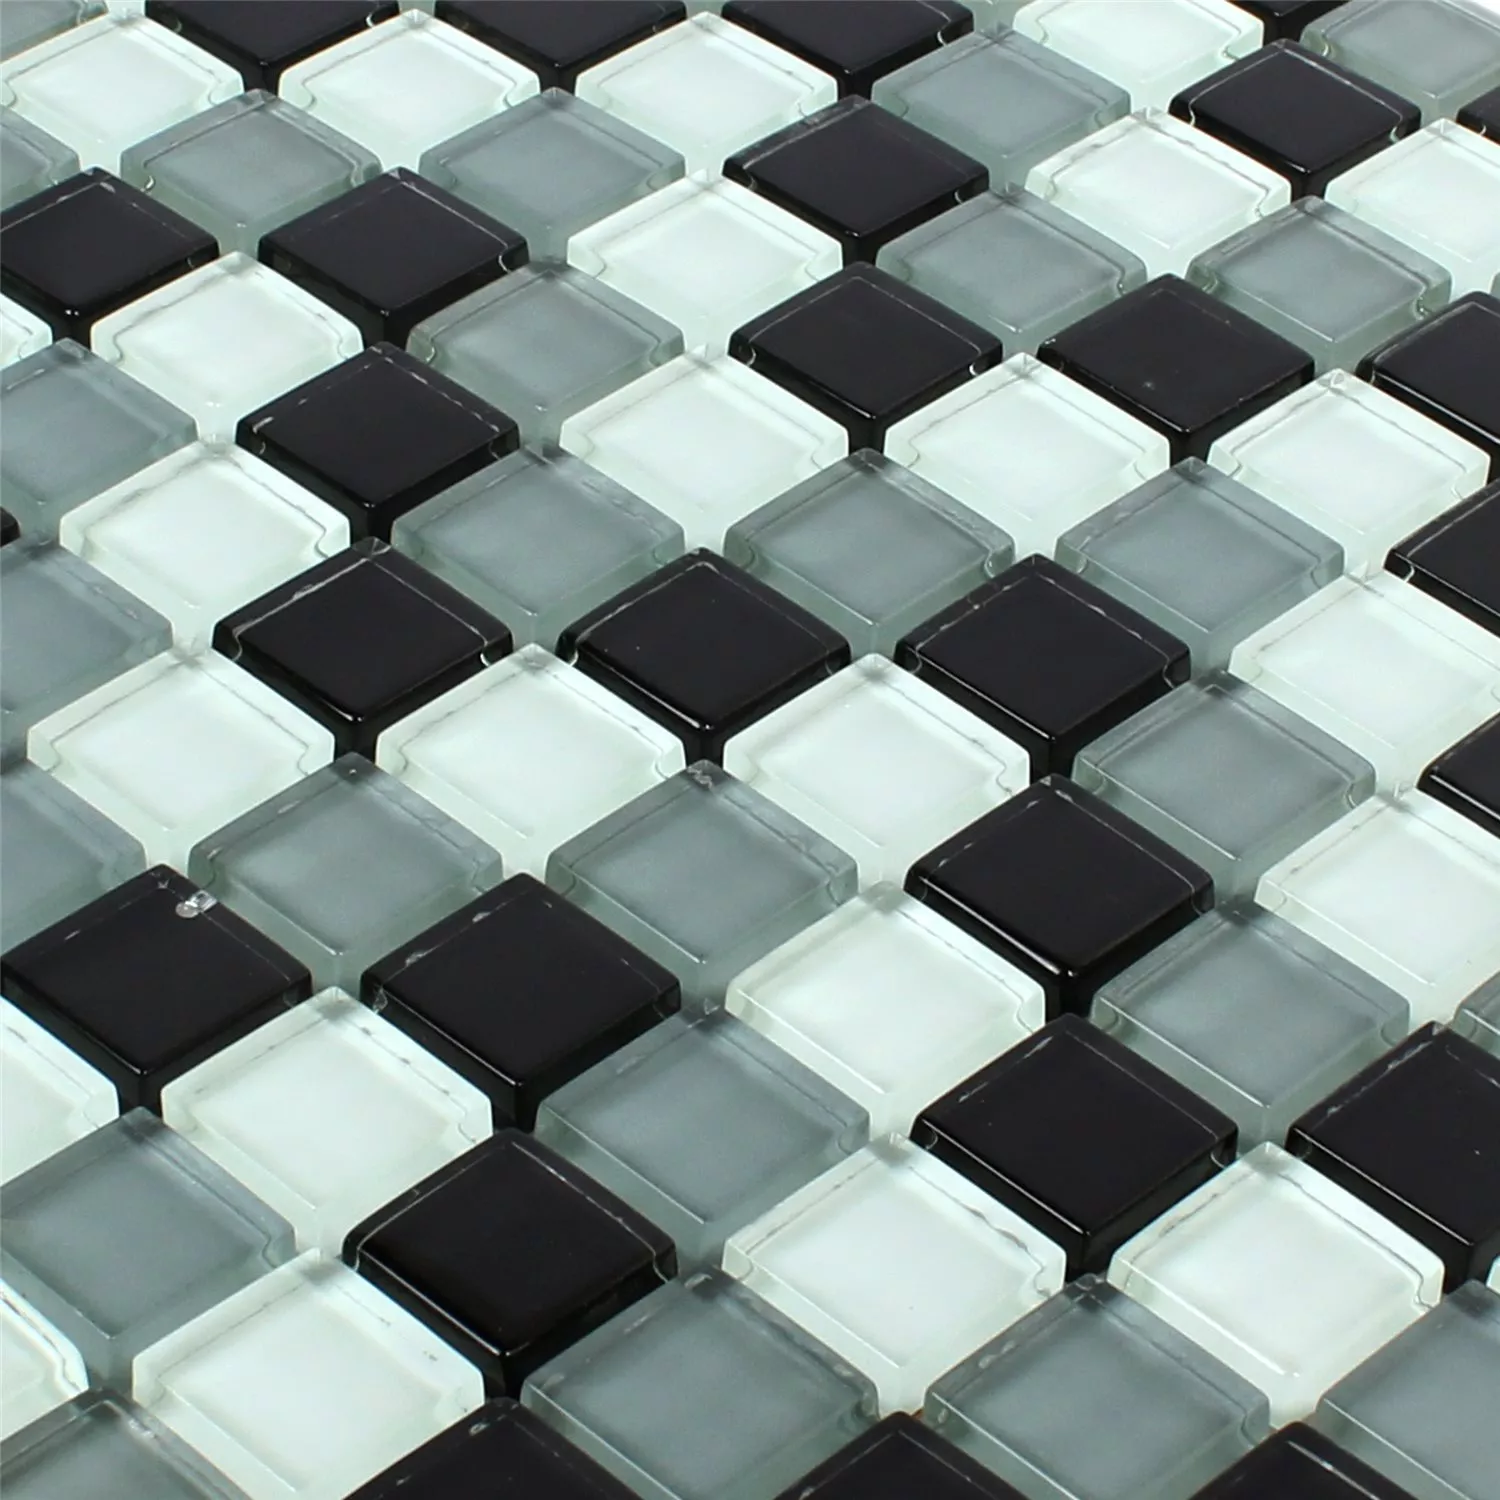 Mosaic Tiles Glass Palmas Black Mix